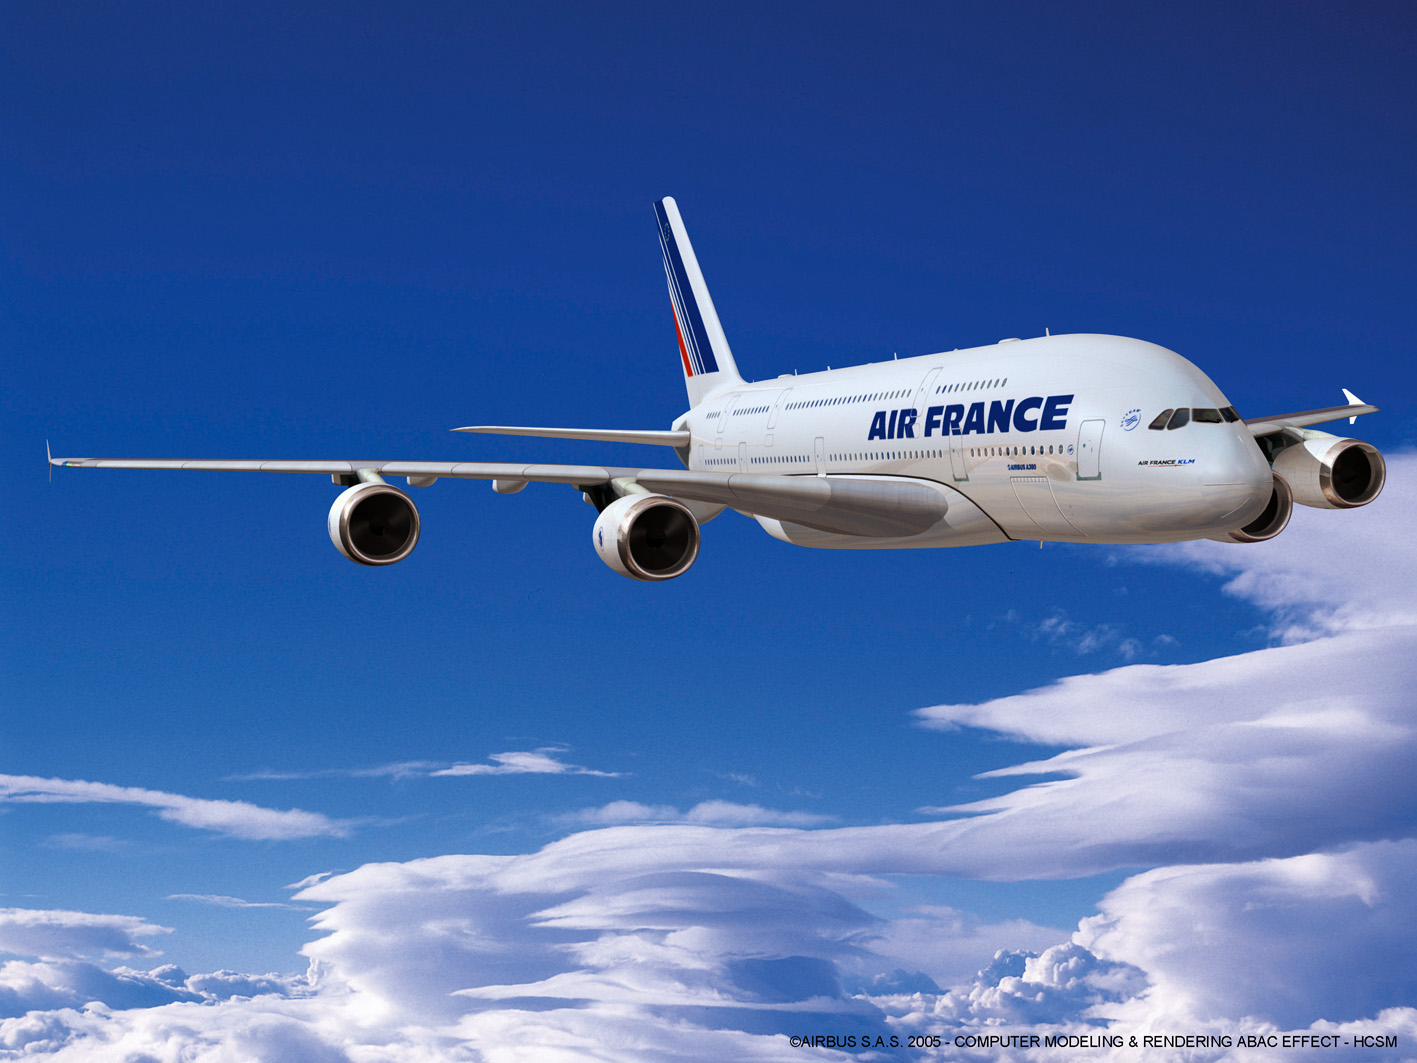 http://www.japon-voyage.com/wp-content/uploads/2010/09/air-france-A380.jpg